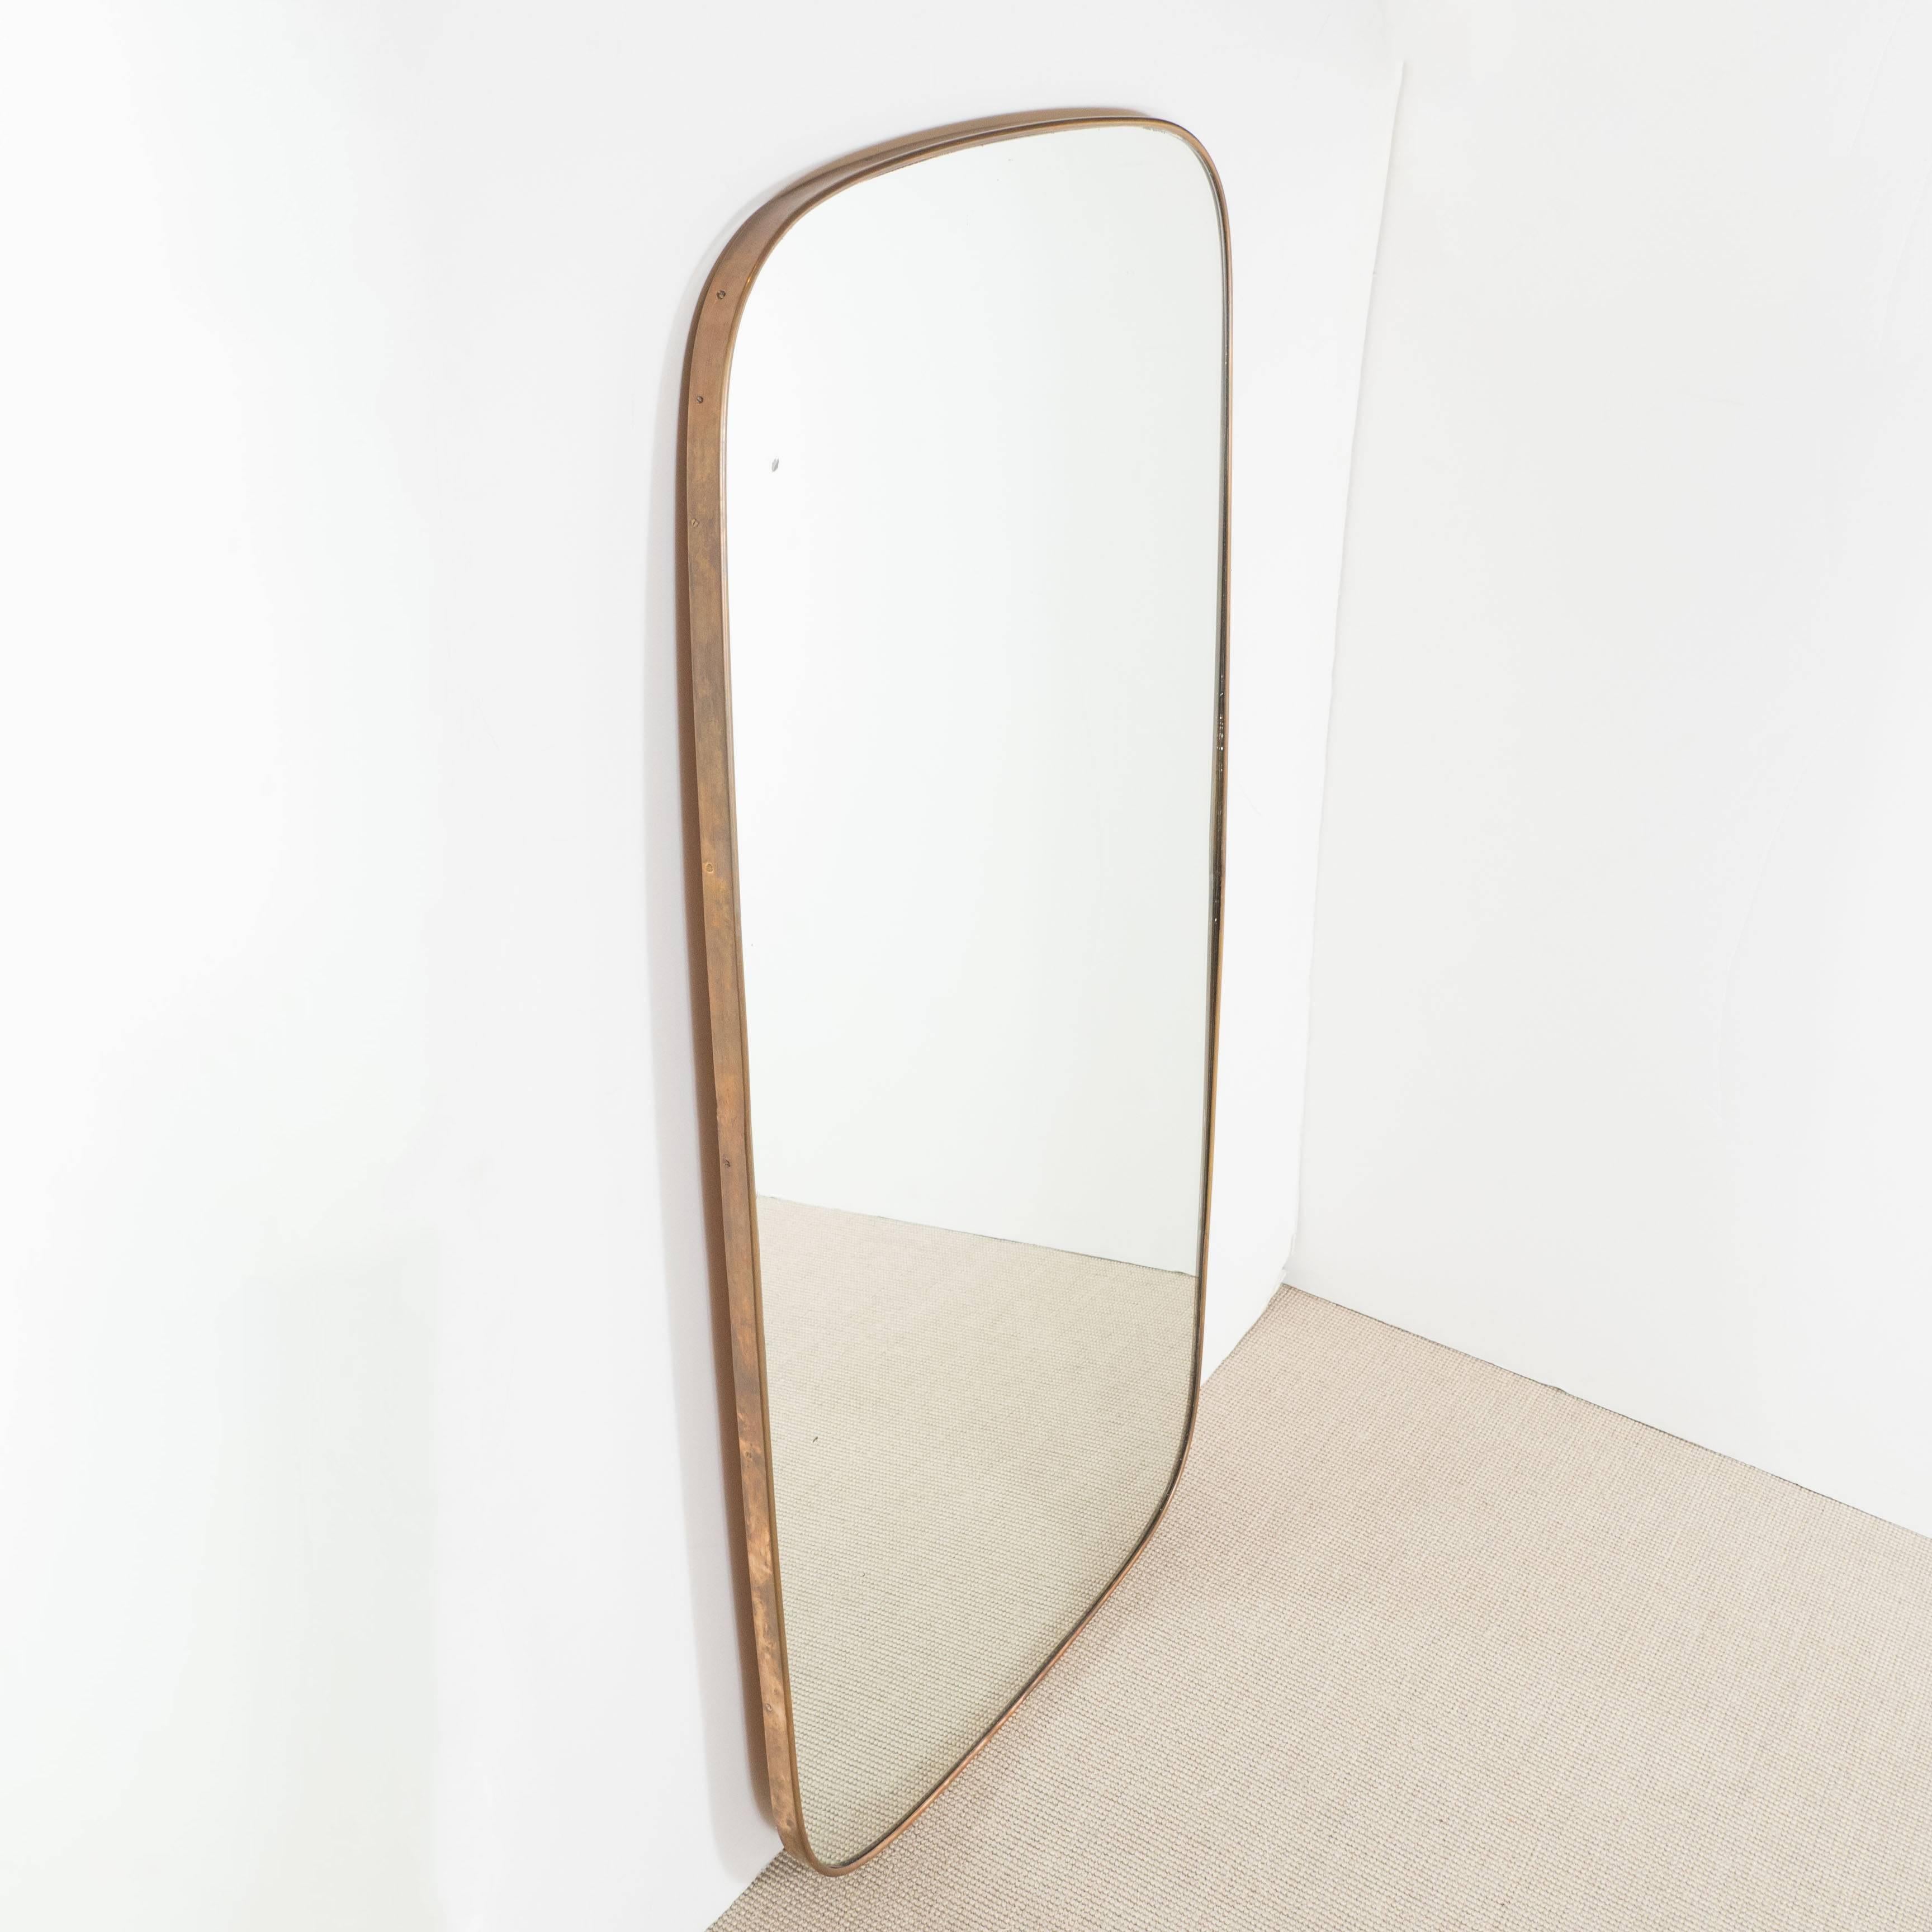 Italian modernist mirror in a cushion shape.